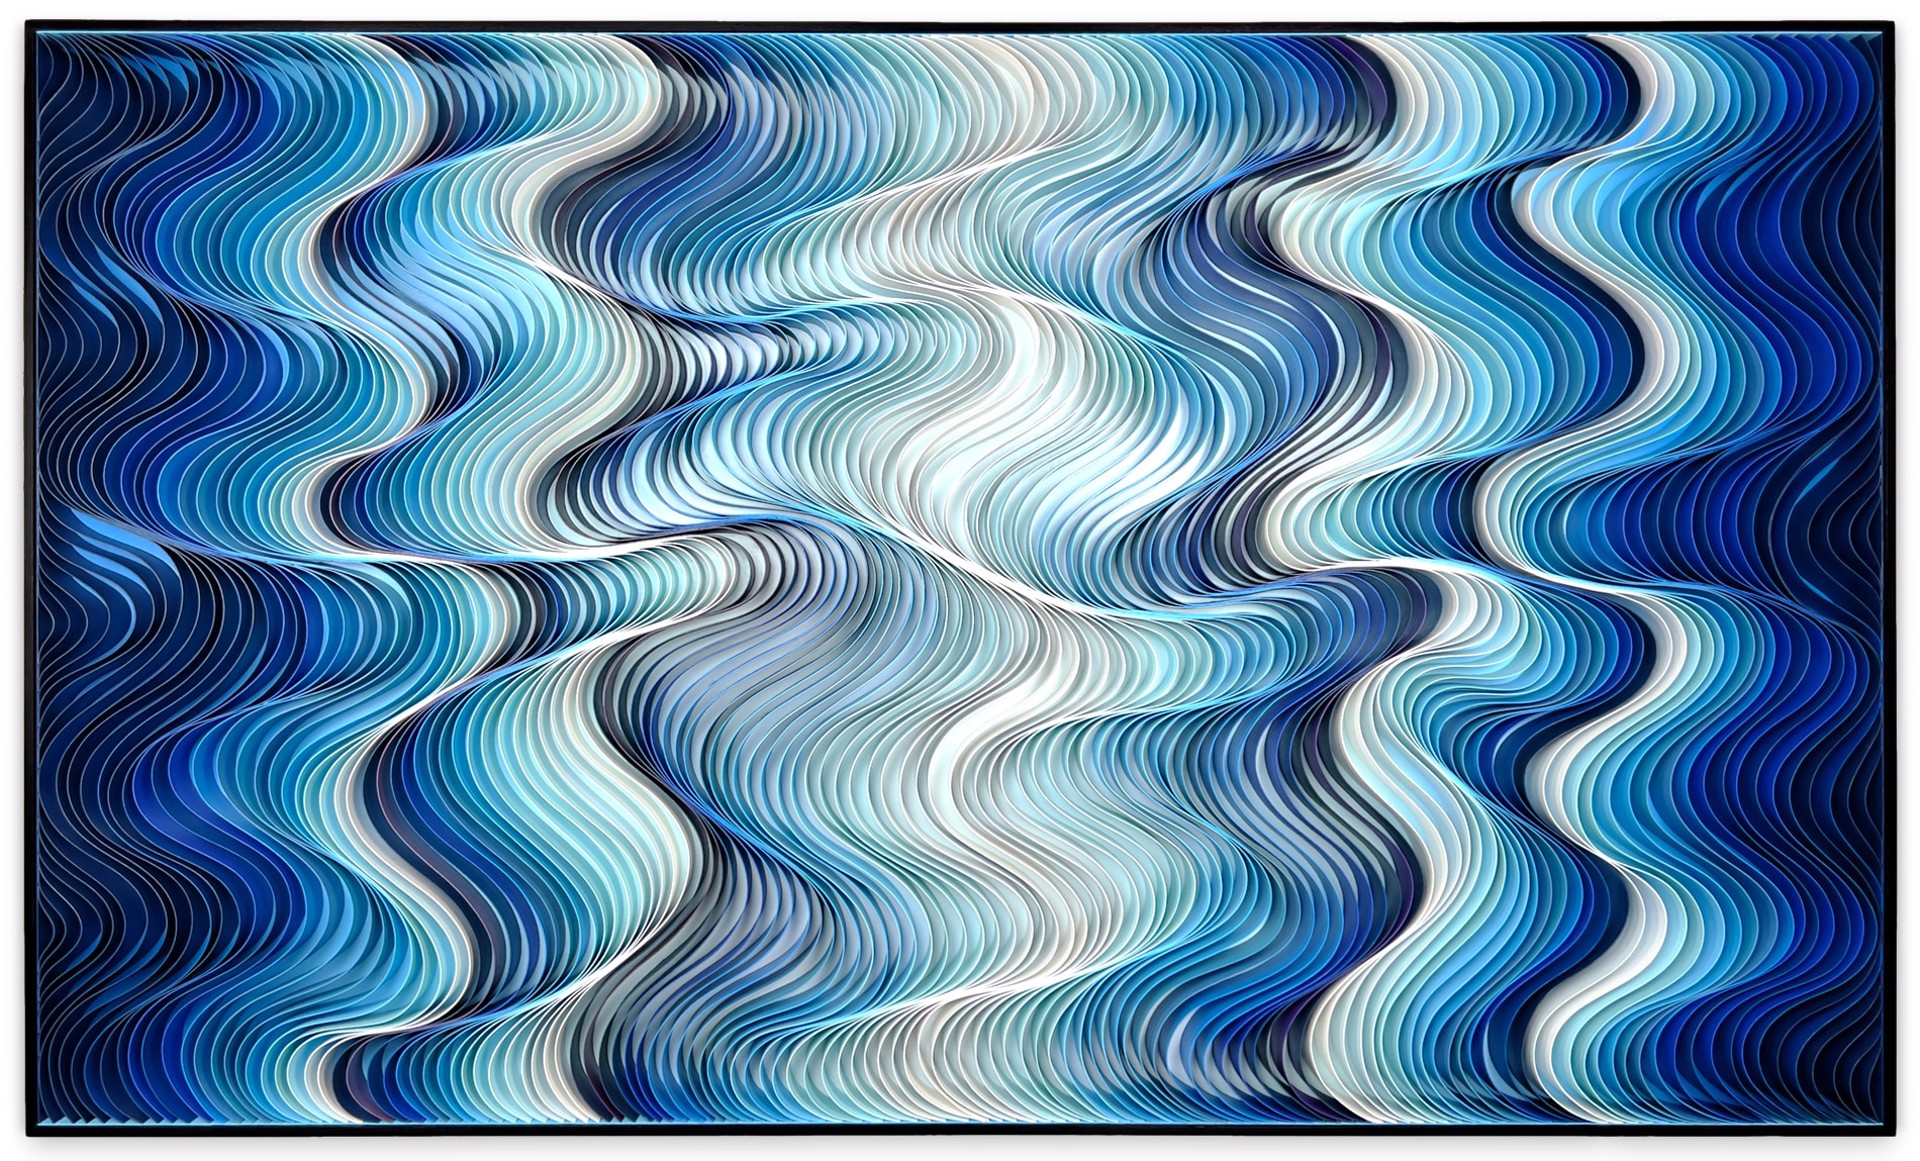 Blue Dream by Stallman Studio